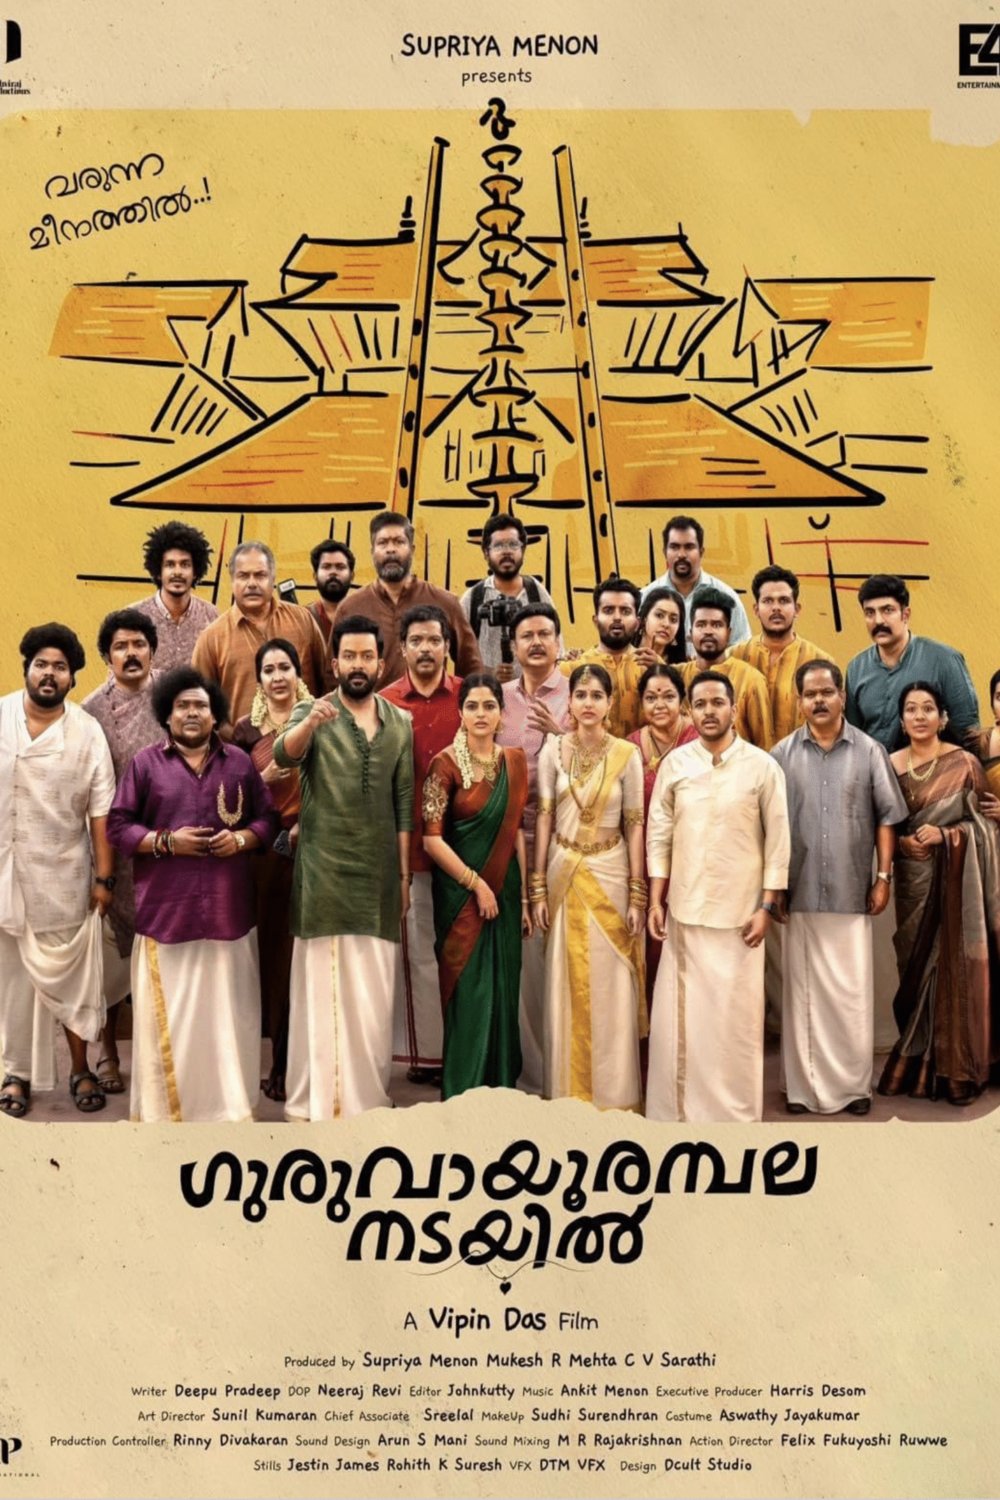 Malayalam poster of the movie Guruvayoor Ambalanadayil